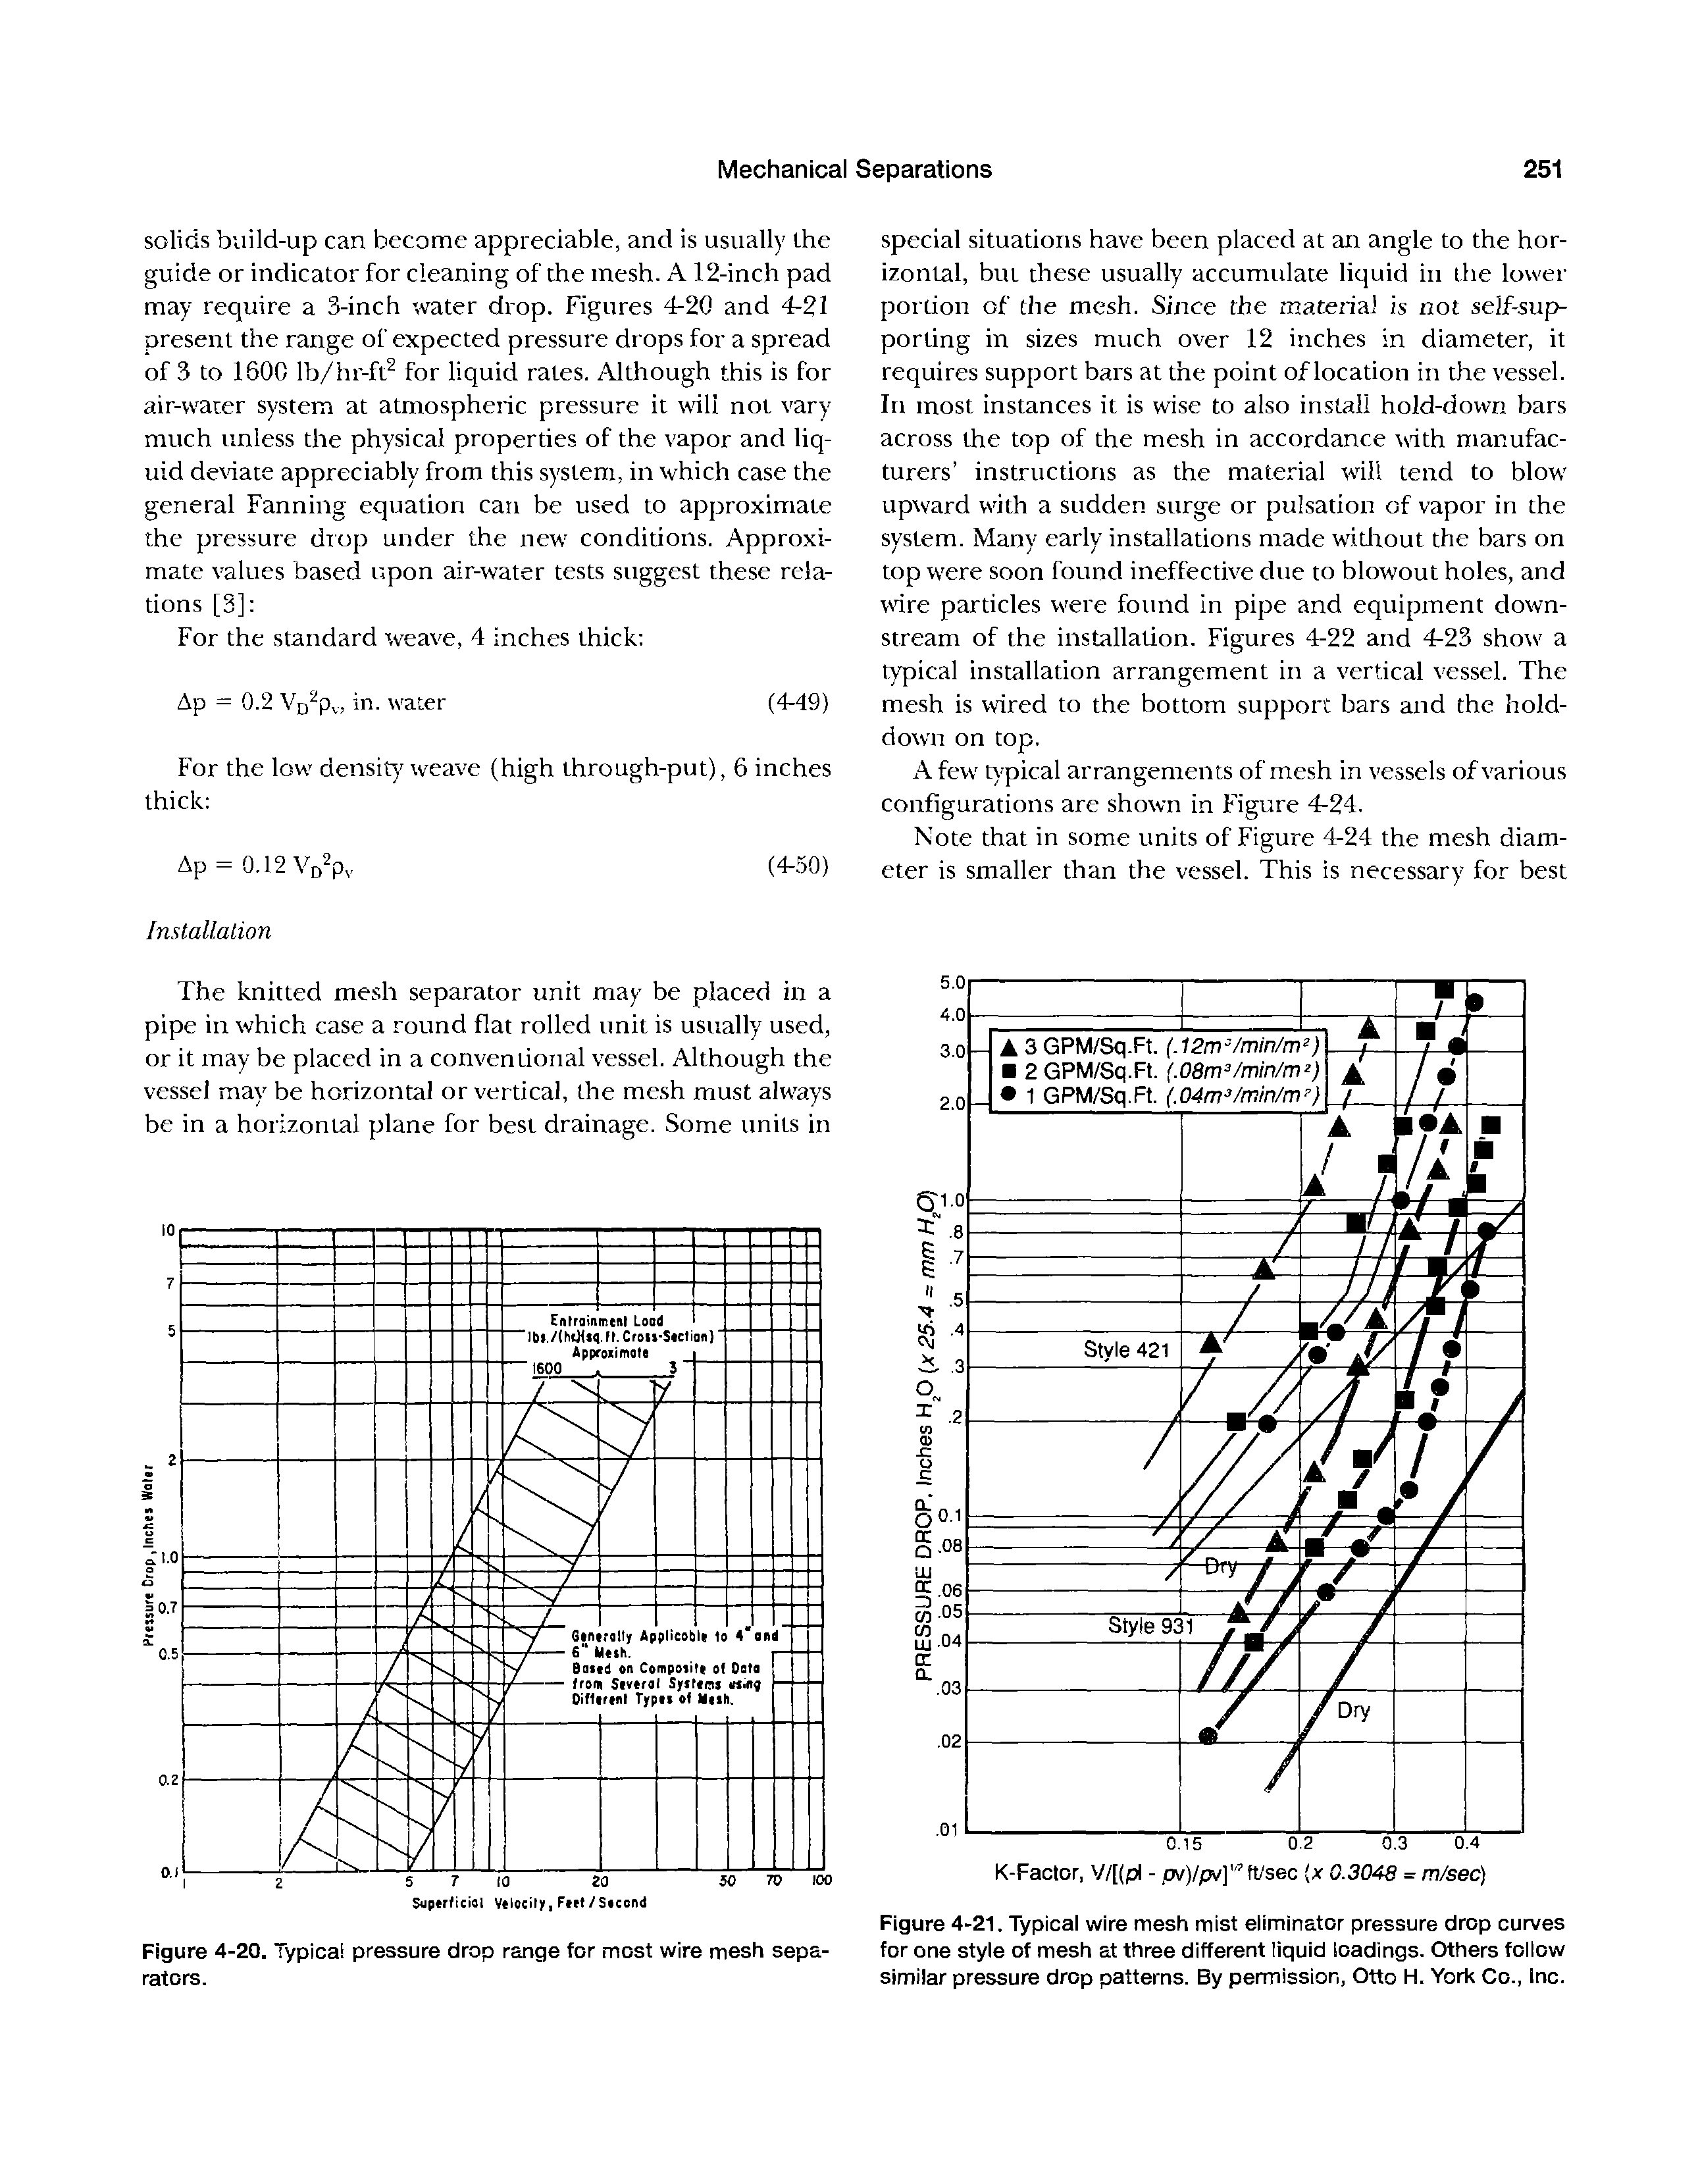 Figure 4-20. Typical pressure drop range for most wire mesh separators.